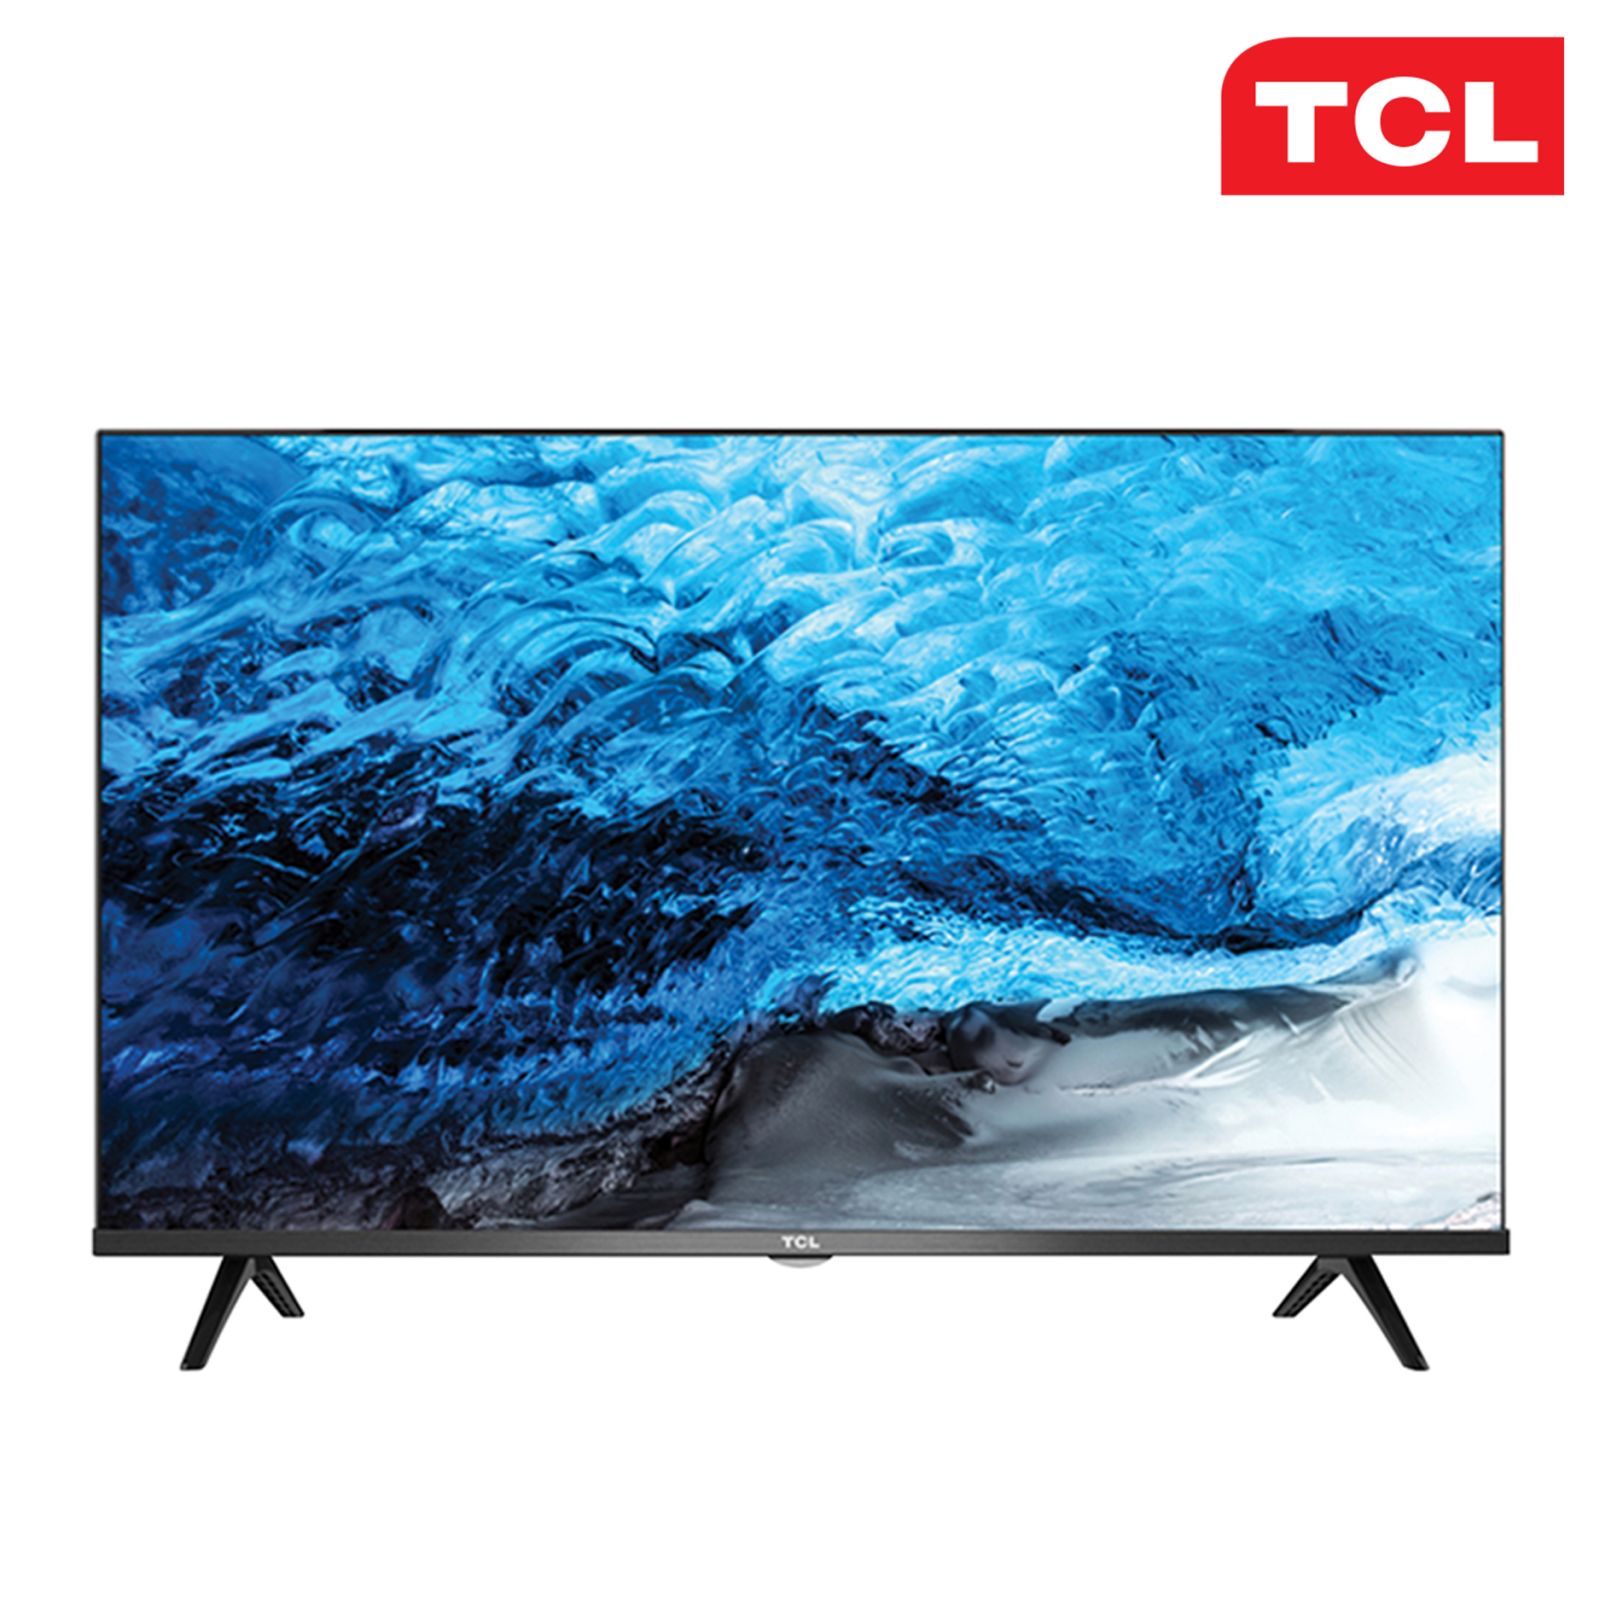 Smart TV 42 Full HD TCL L42S6500